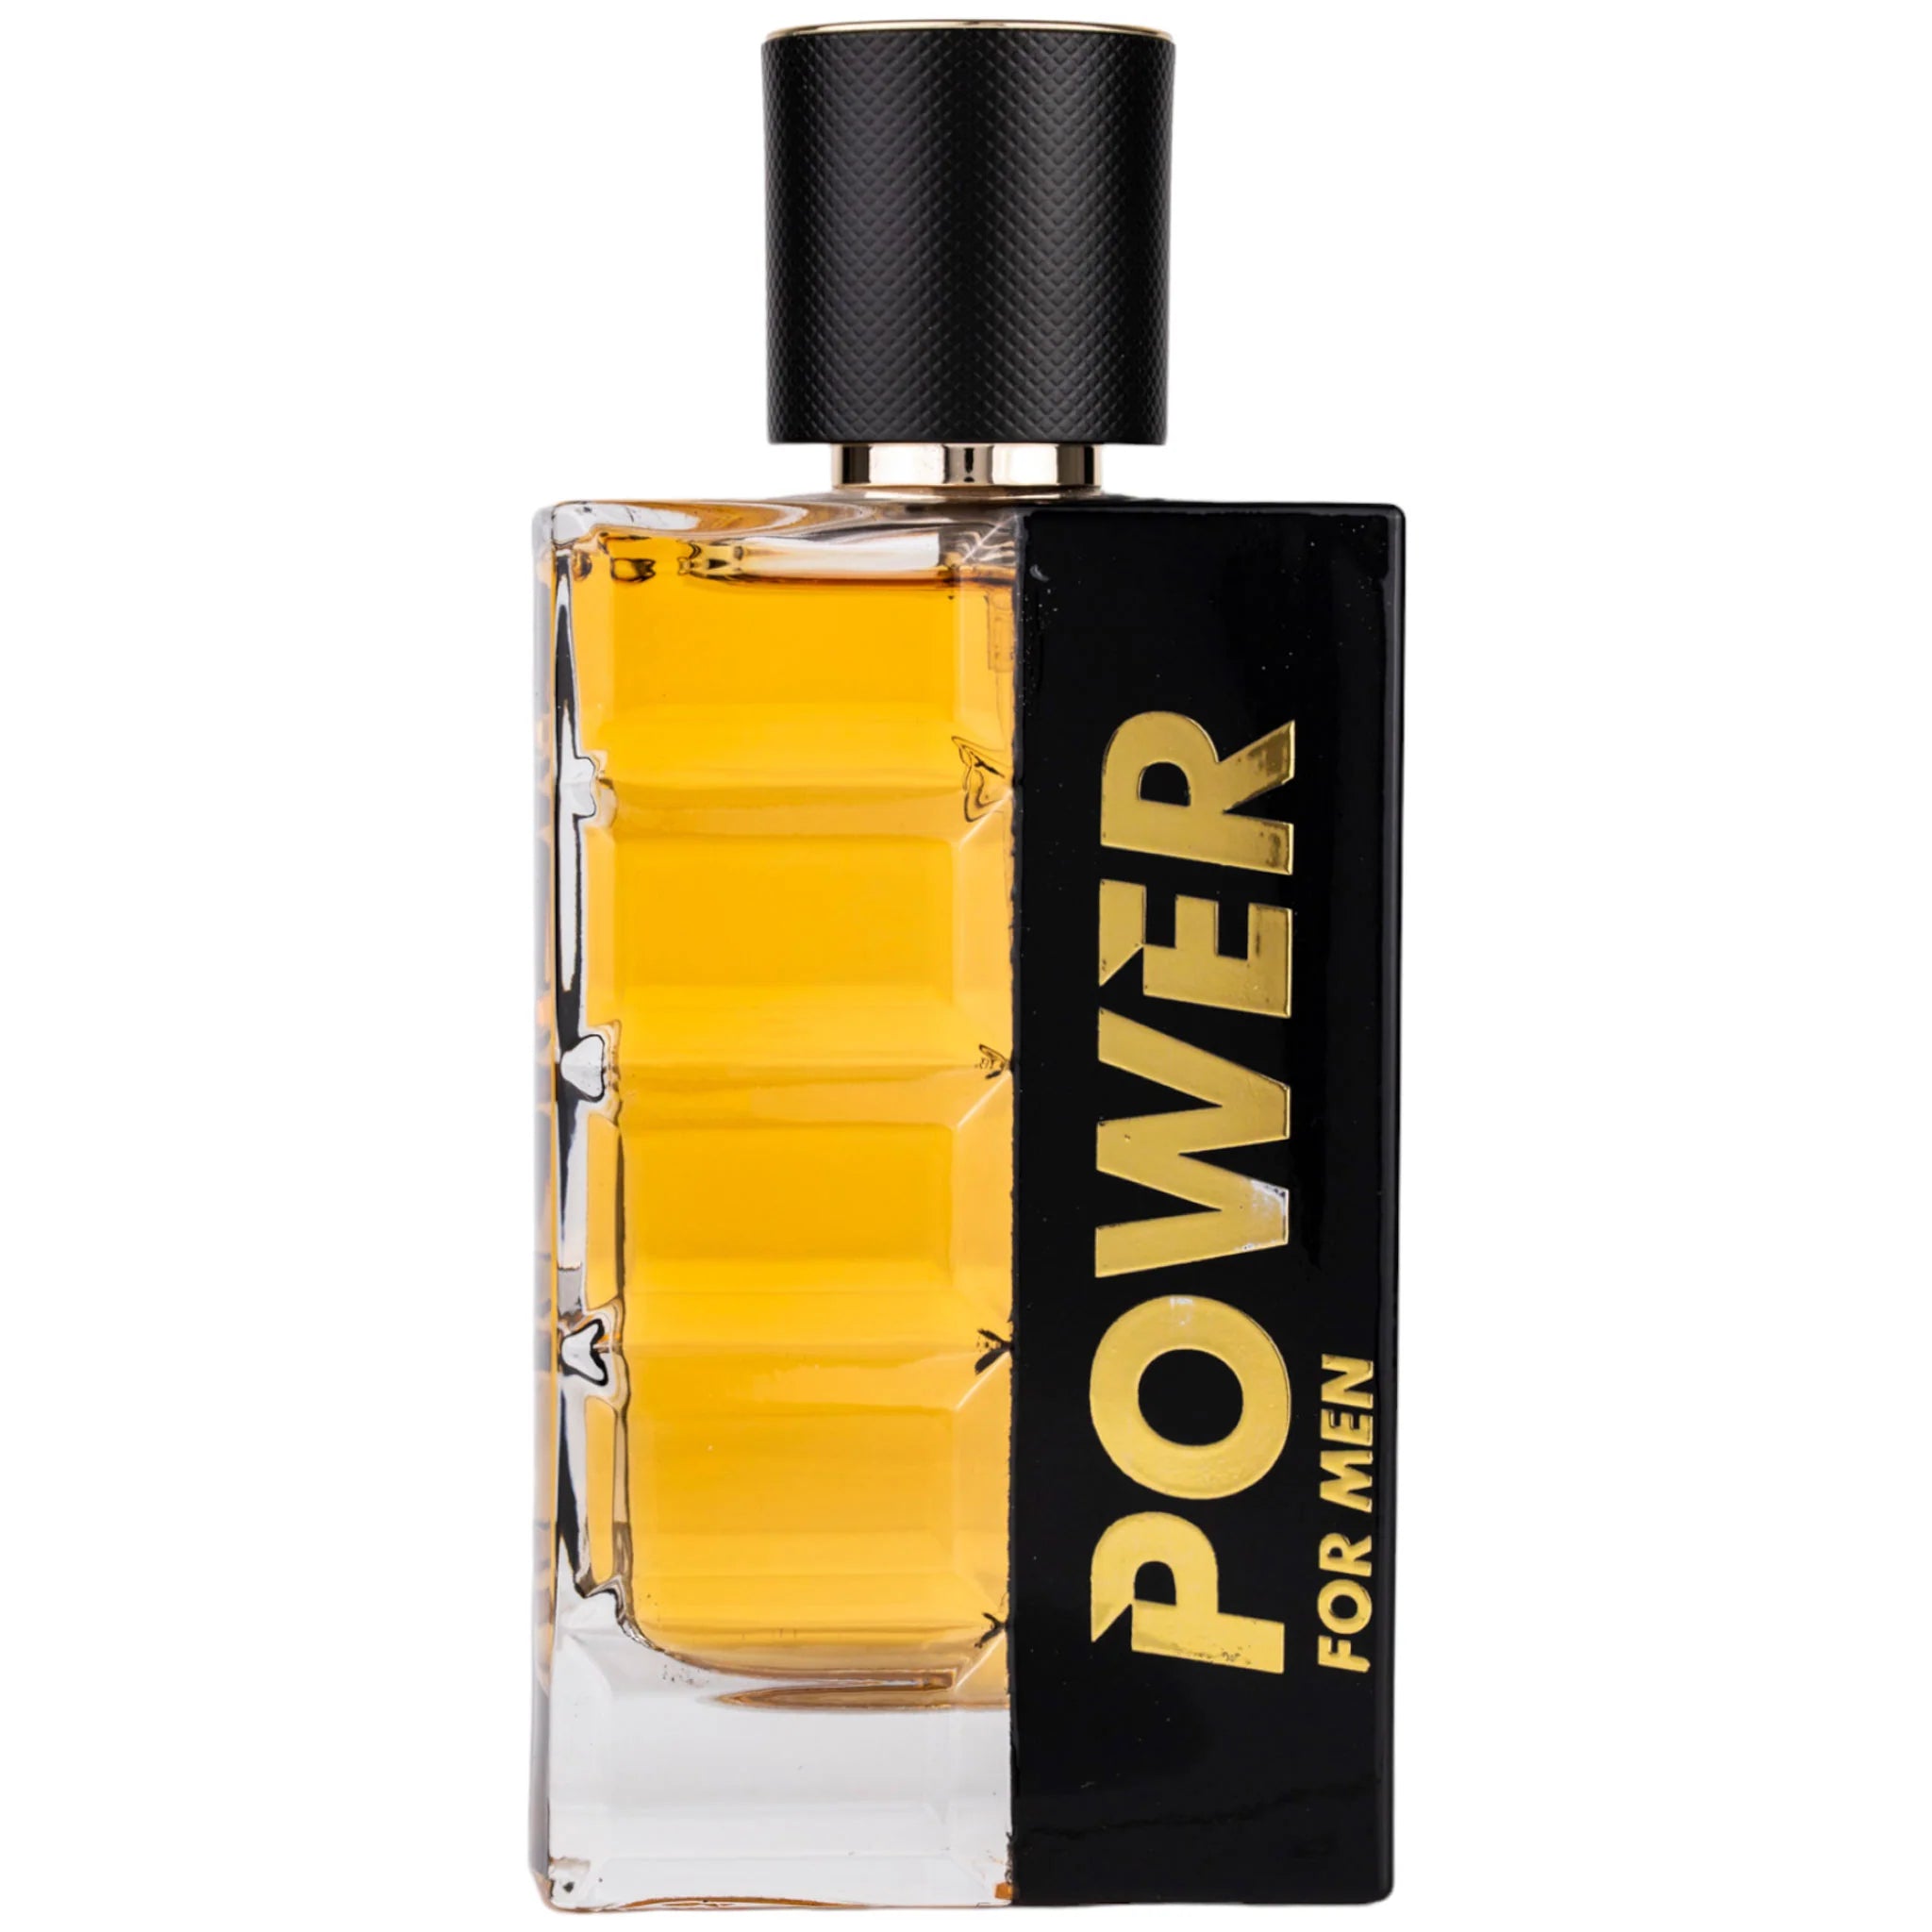 Oriental Perfume - Power